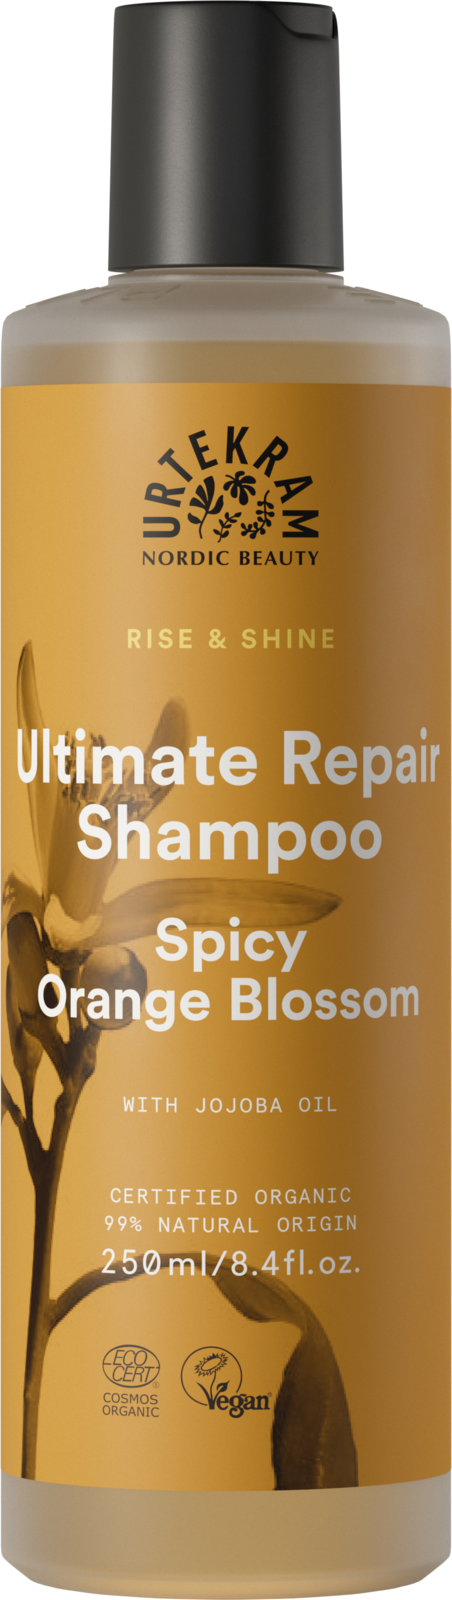 Urtekram Spicy Orange Blossom Ultimate Repair Shampoo